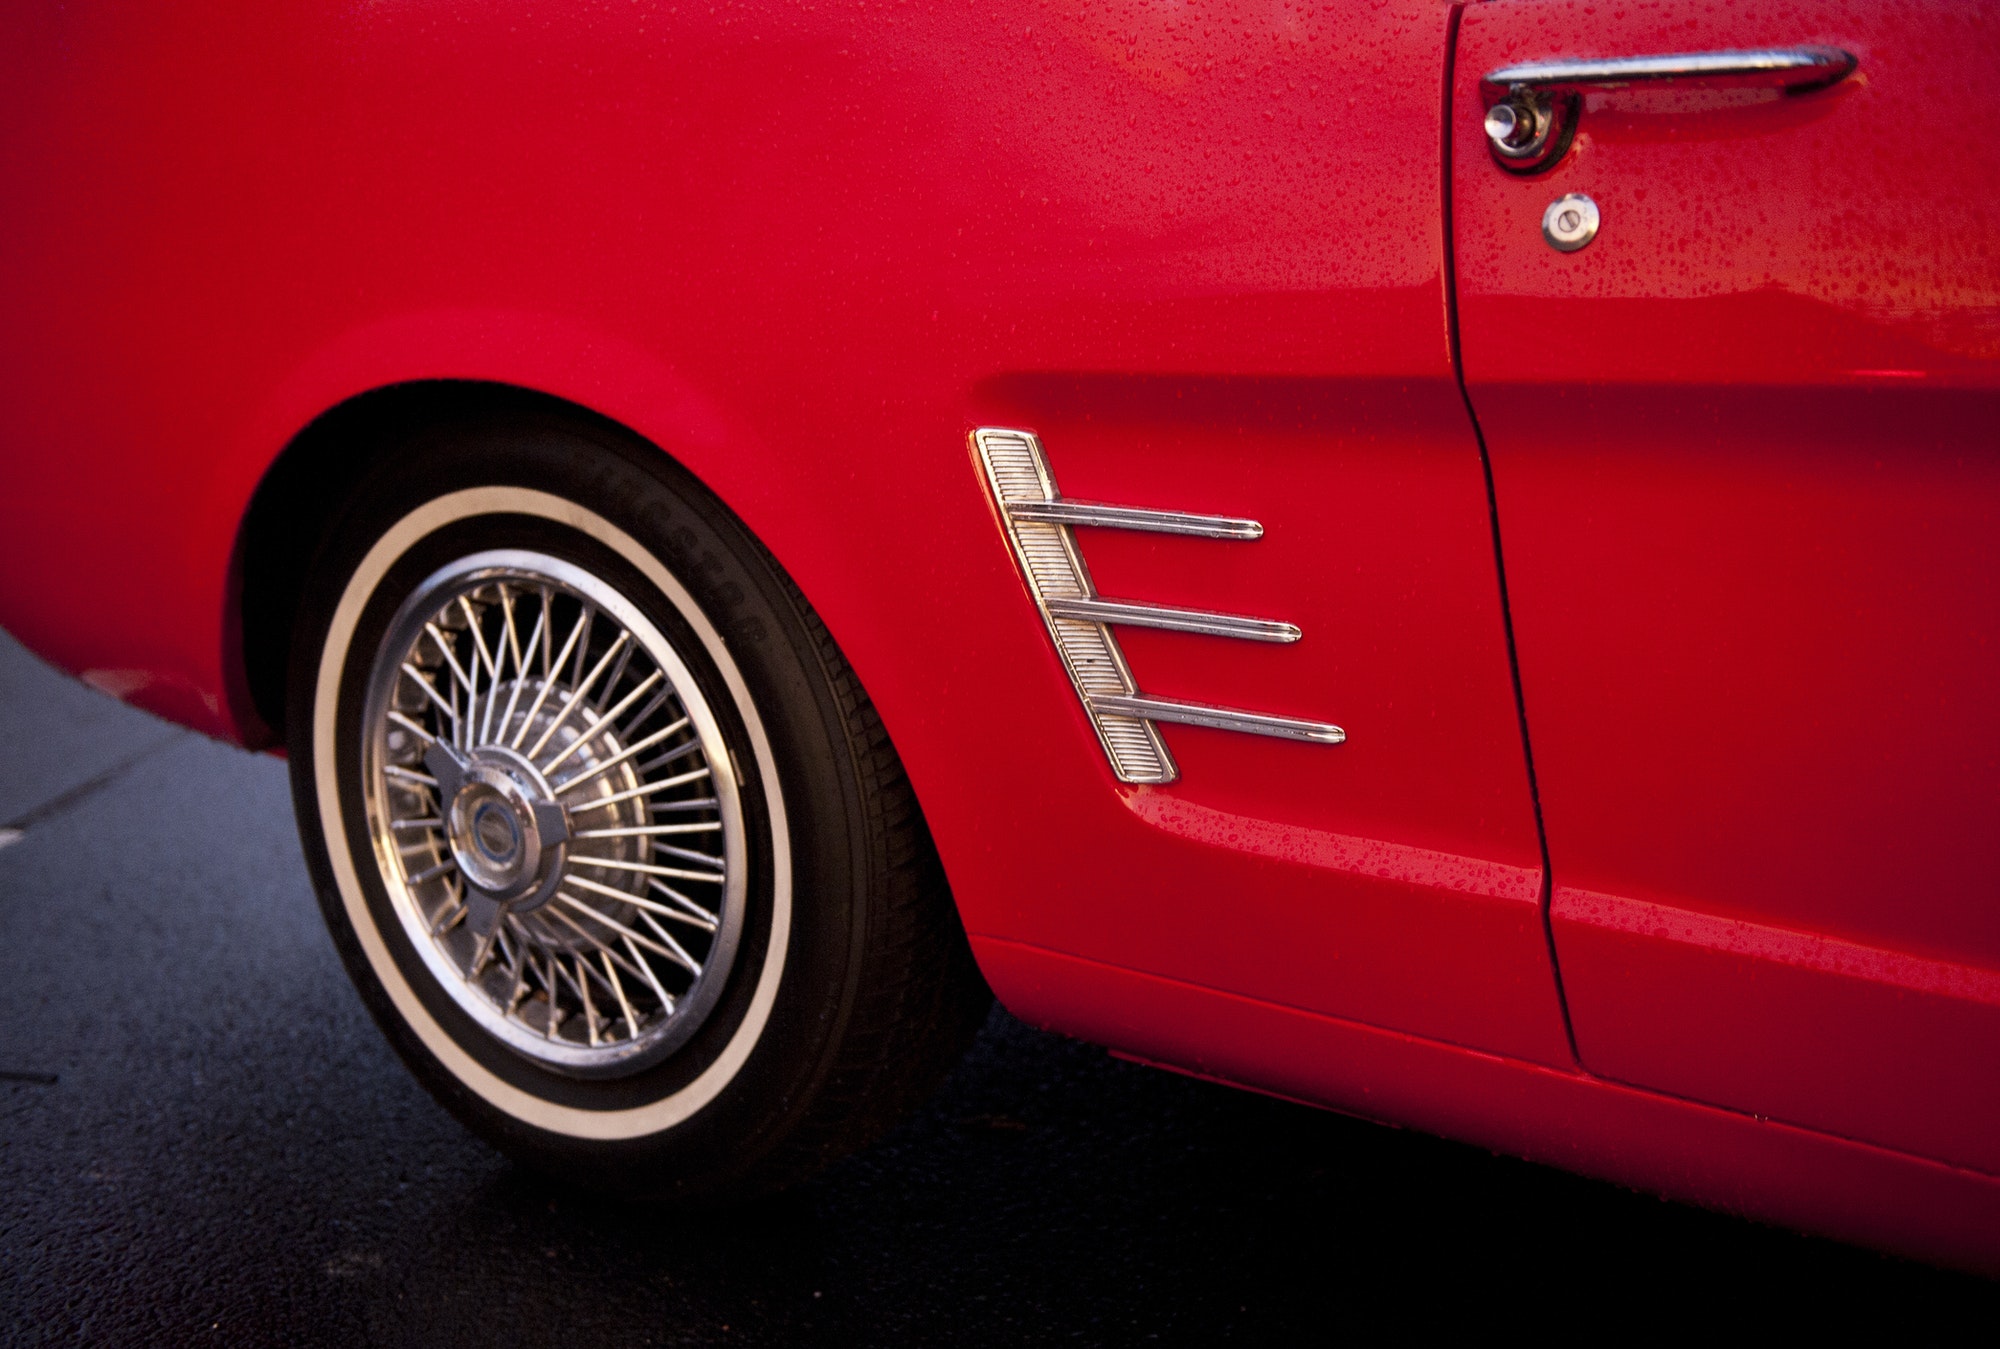 Vintage Red Car Detail